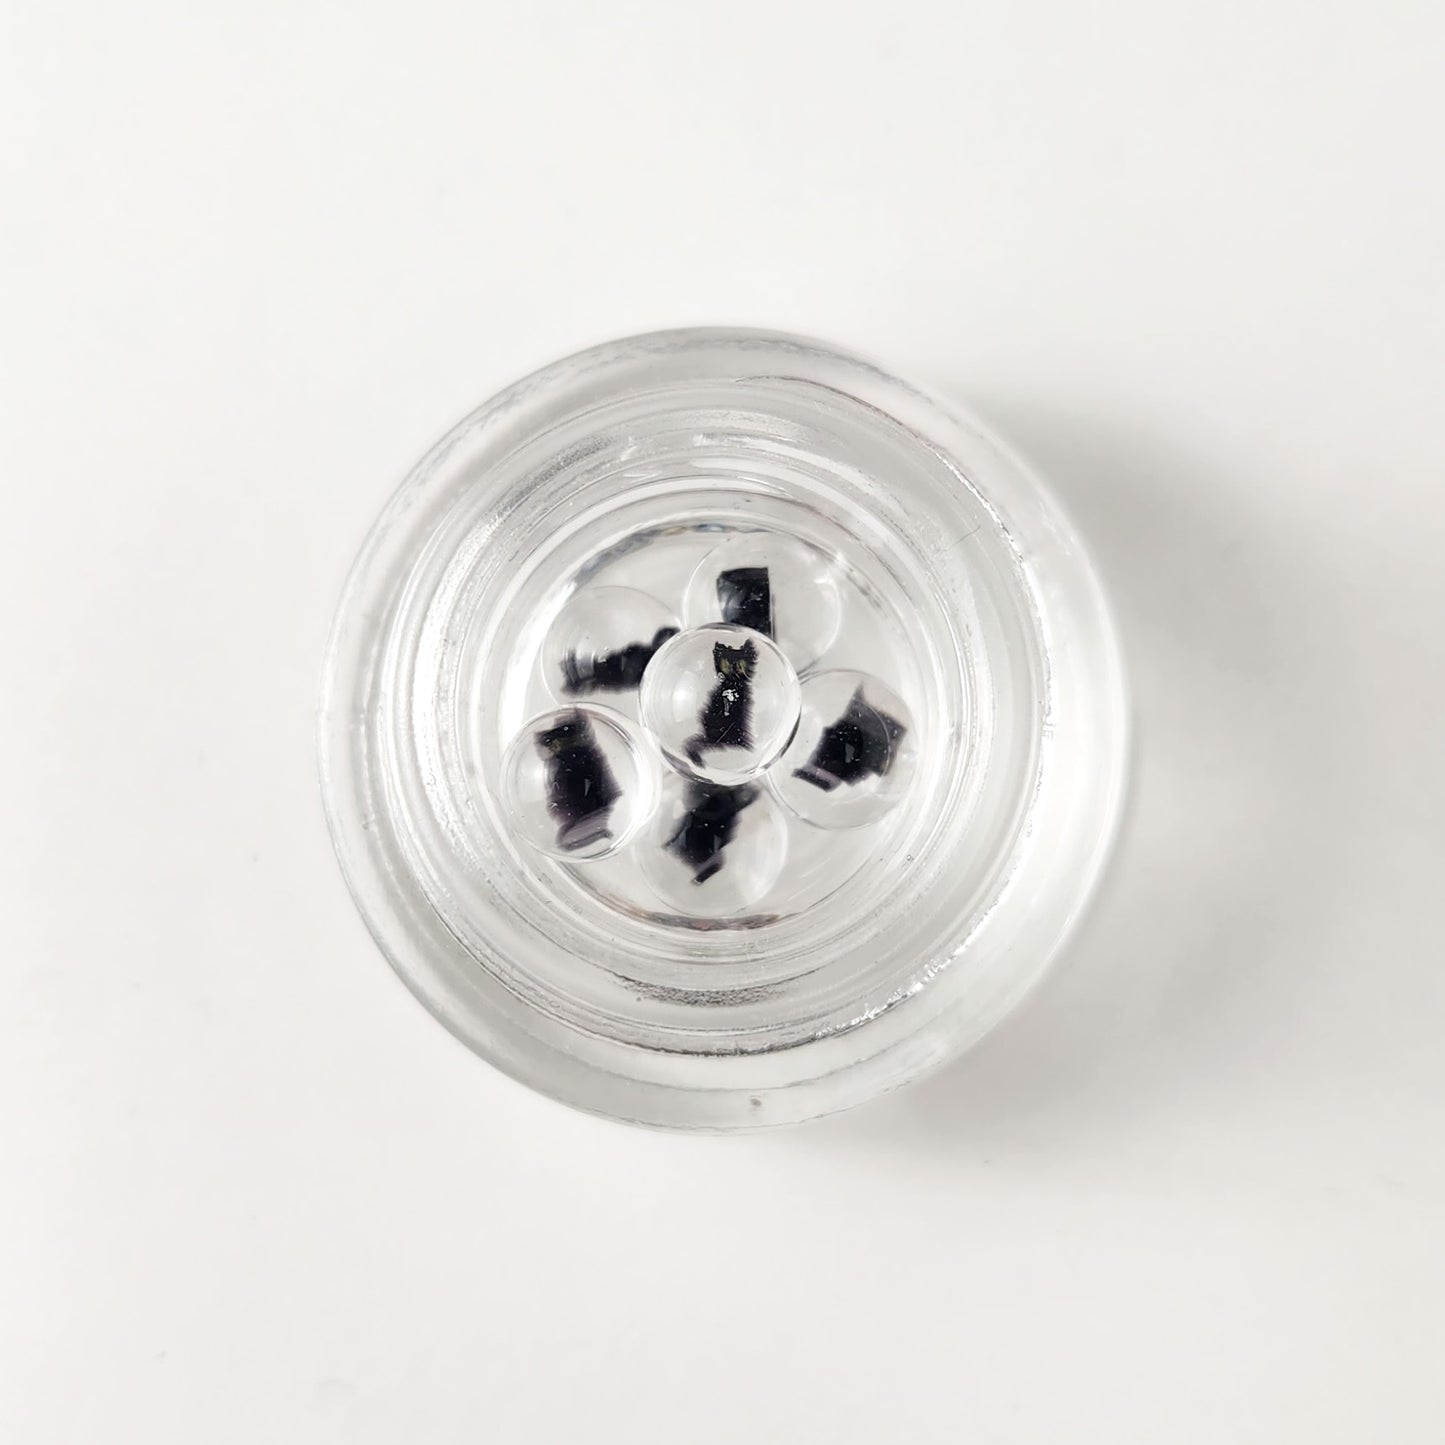 Borocan Glass - Halloween 6mm Millie Terp Pearl x1